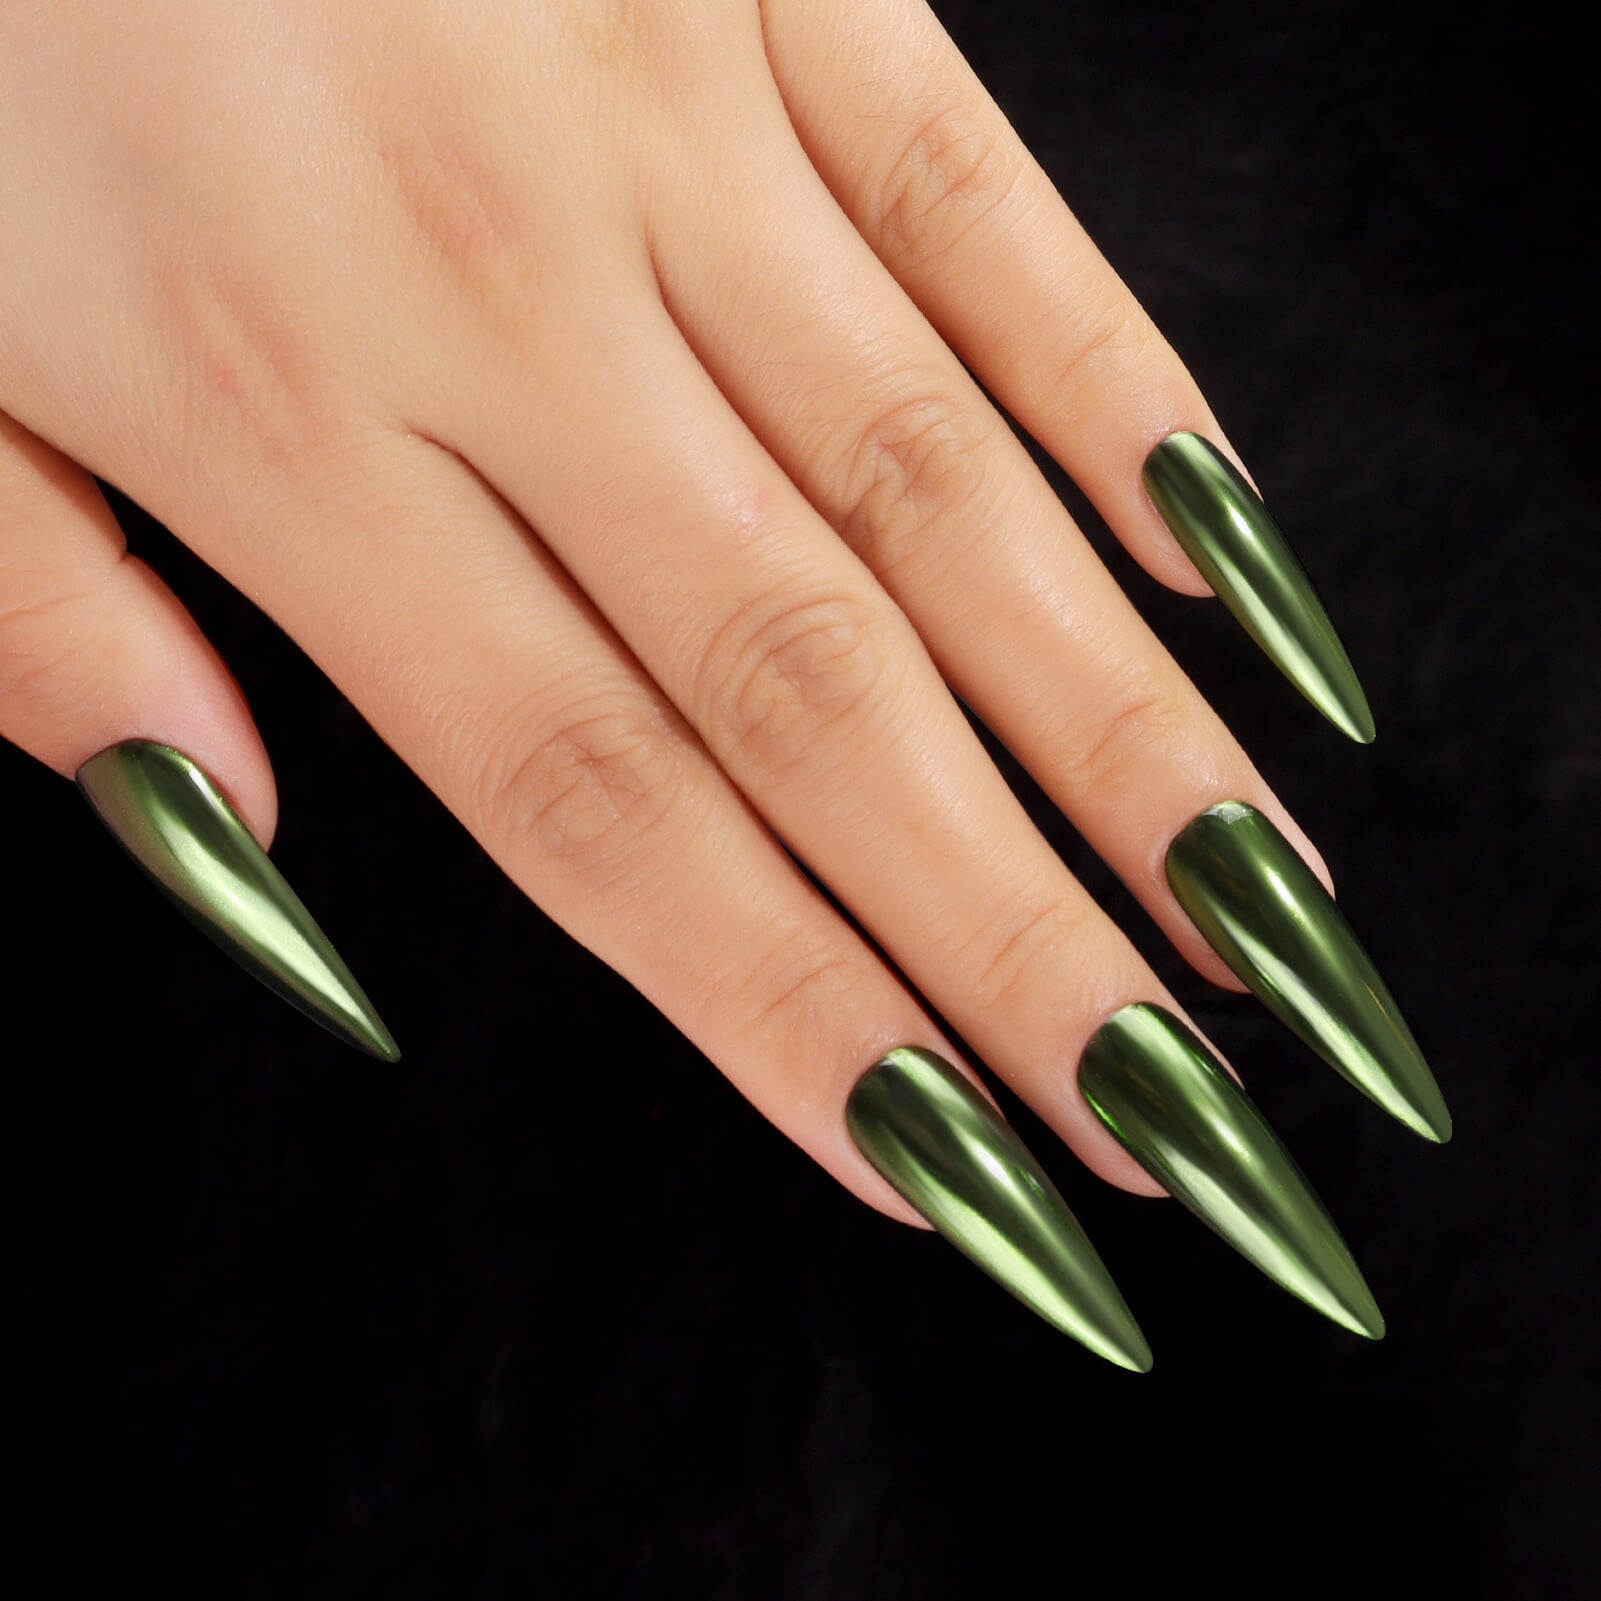 nail-art-chrome-powder-green-mirror-nails